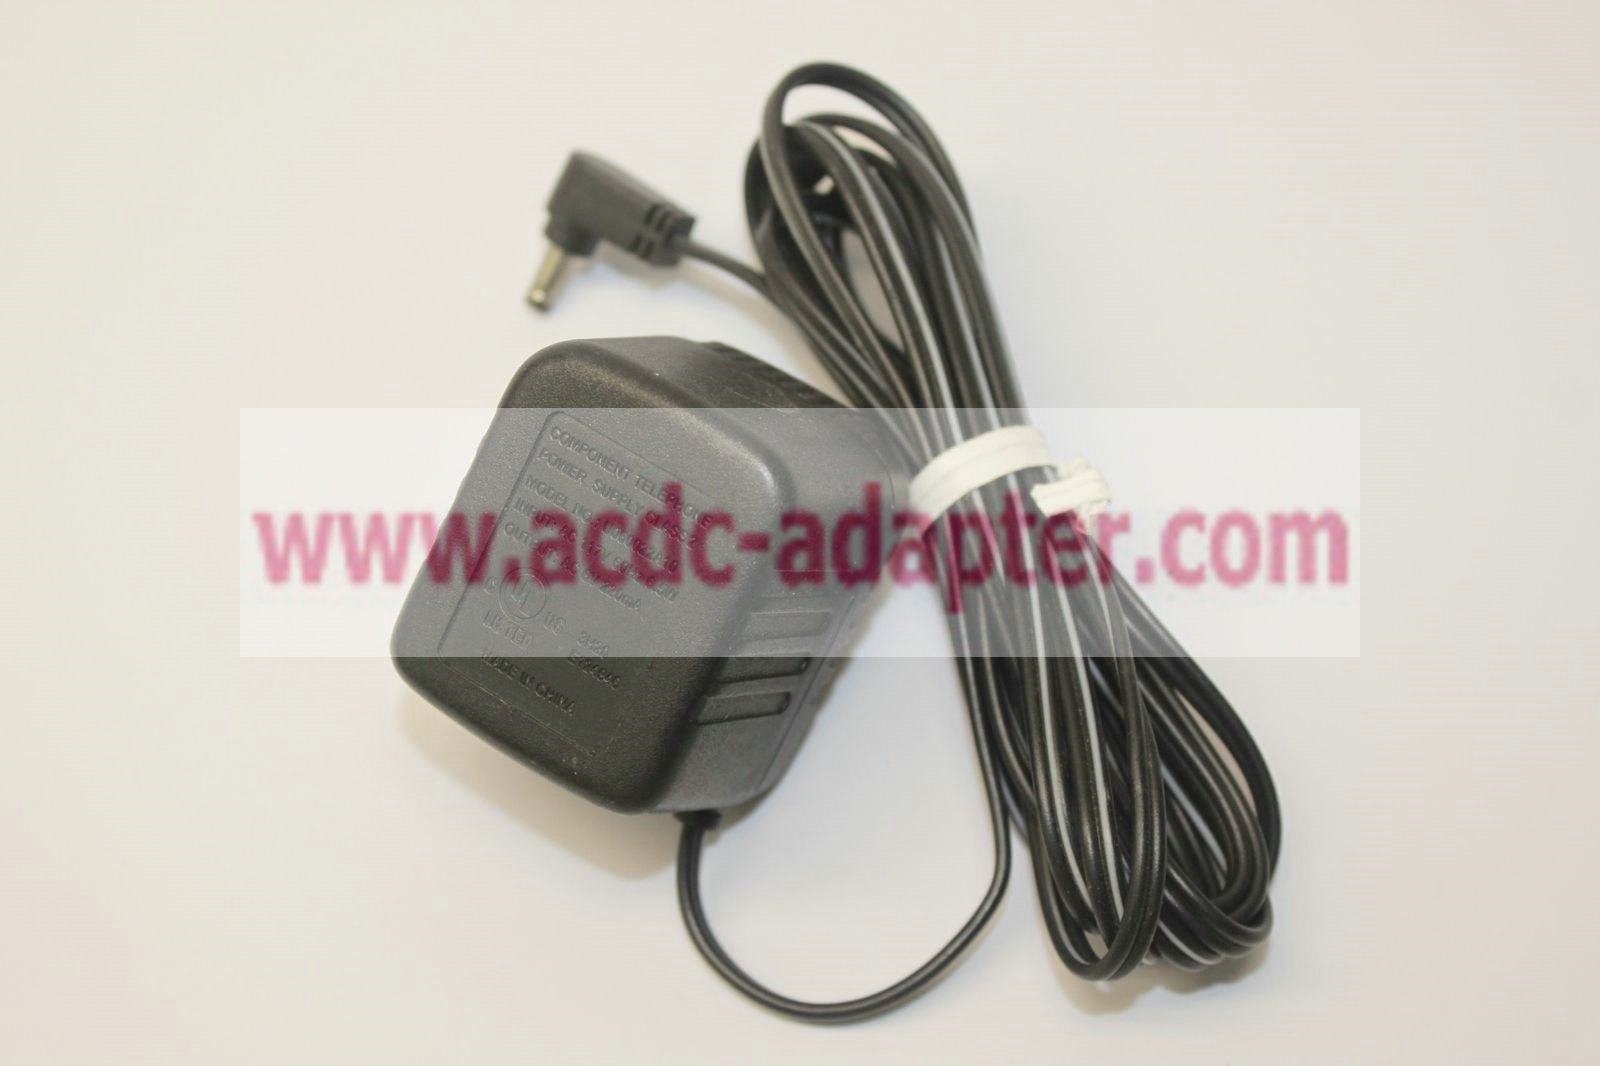 New Component Telephone AC6V 220mA U060022A10 AC Adapter Class 2 Power Supply